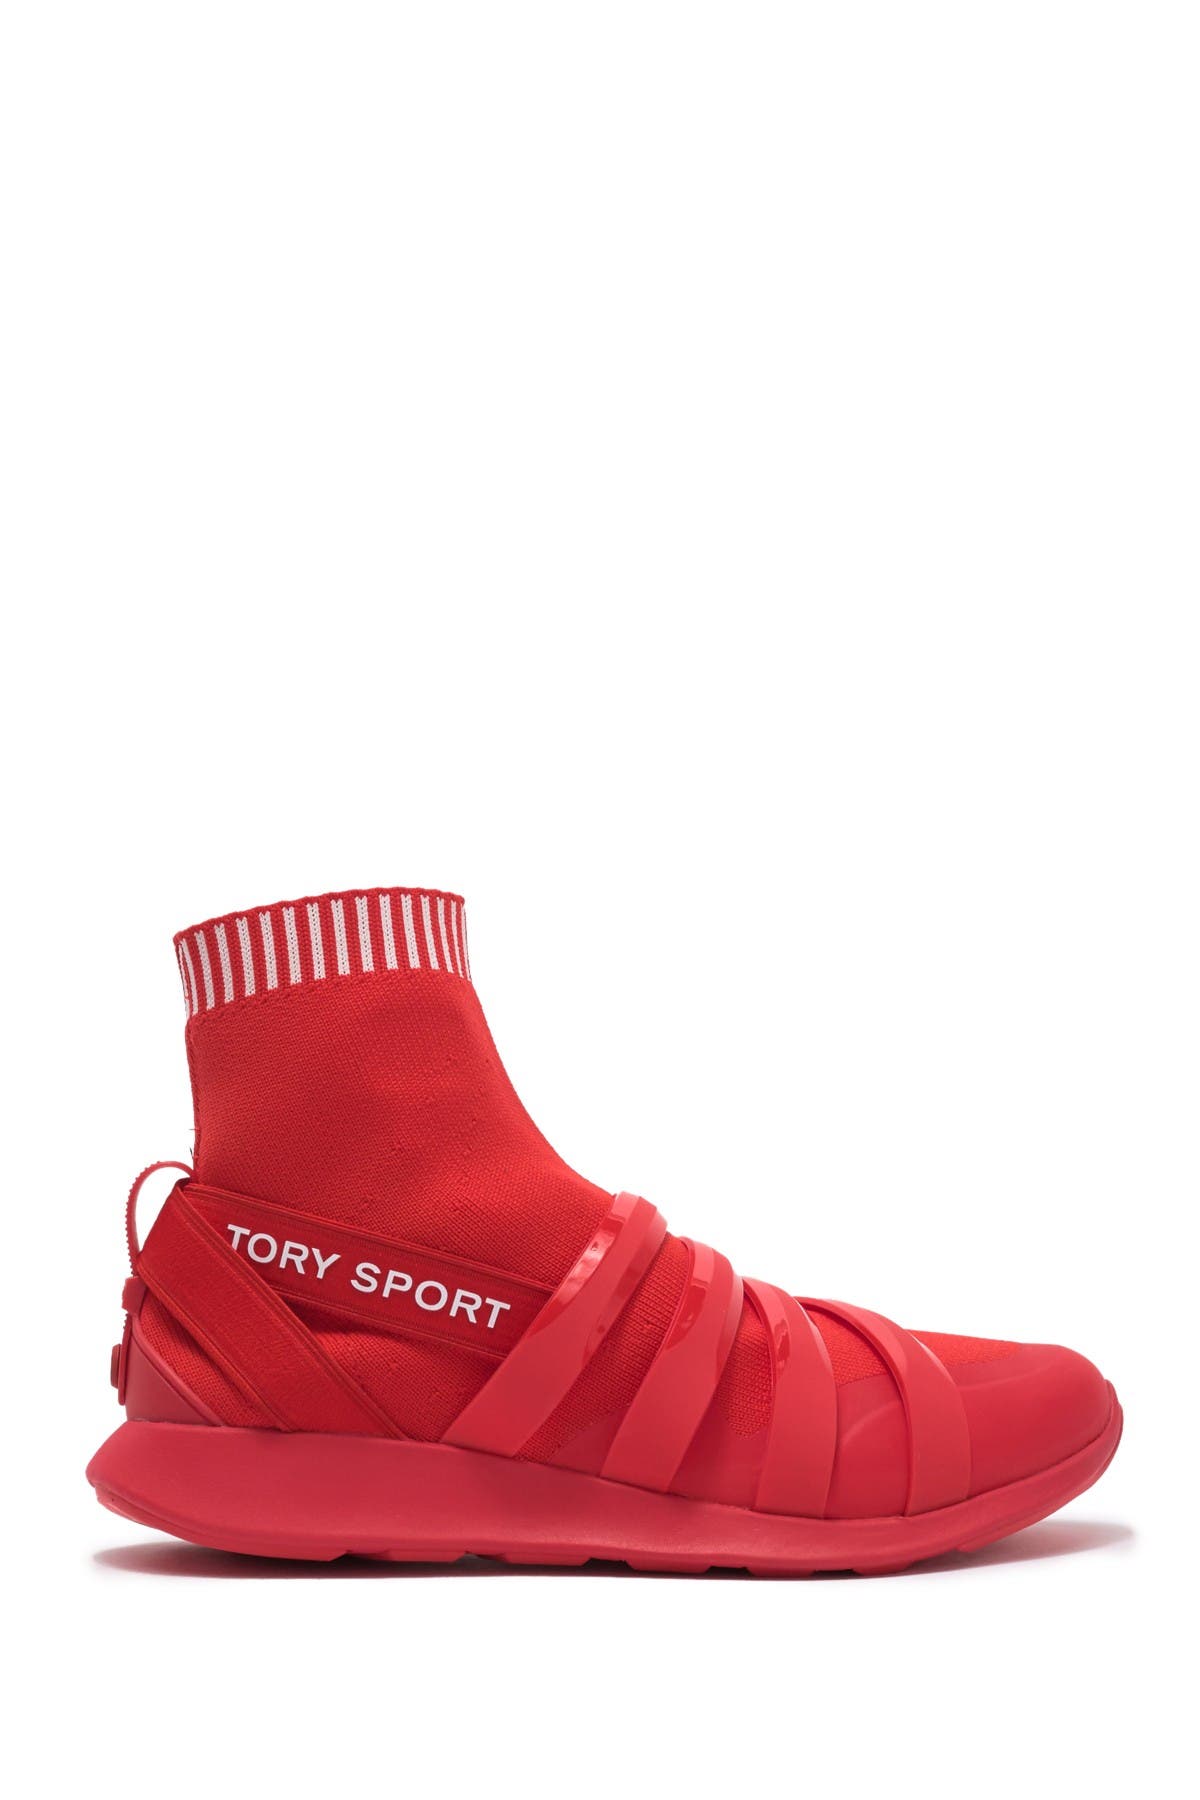 tory burch sock sneakers